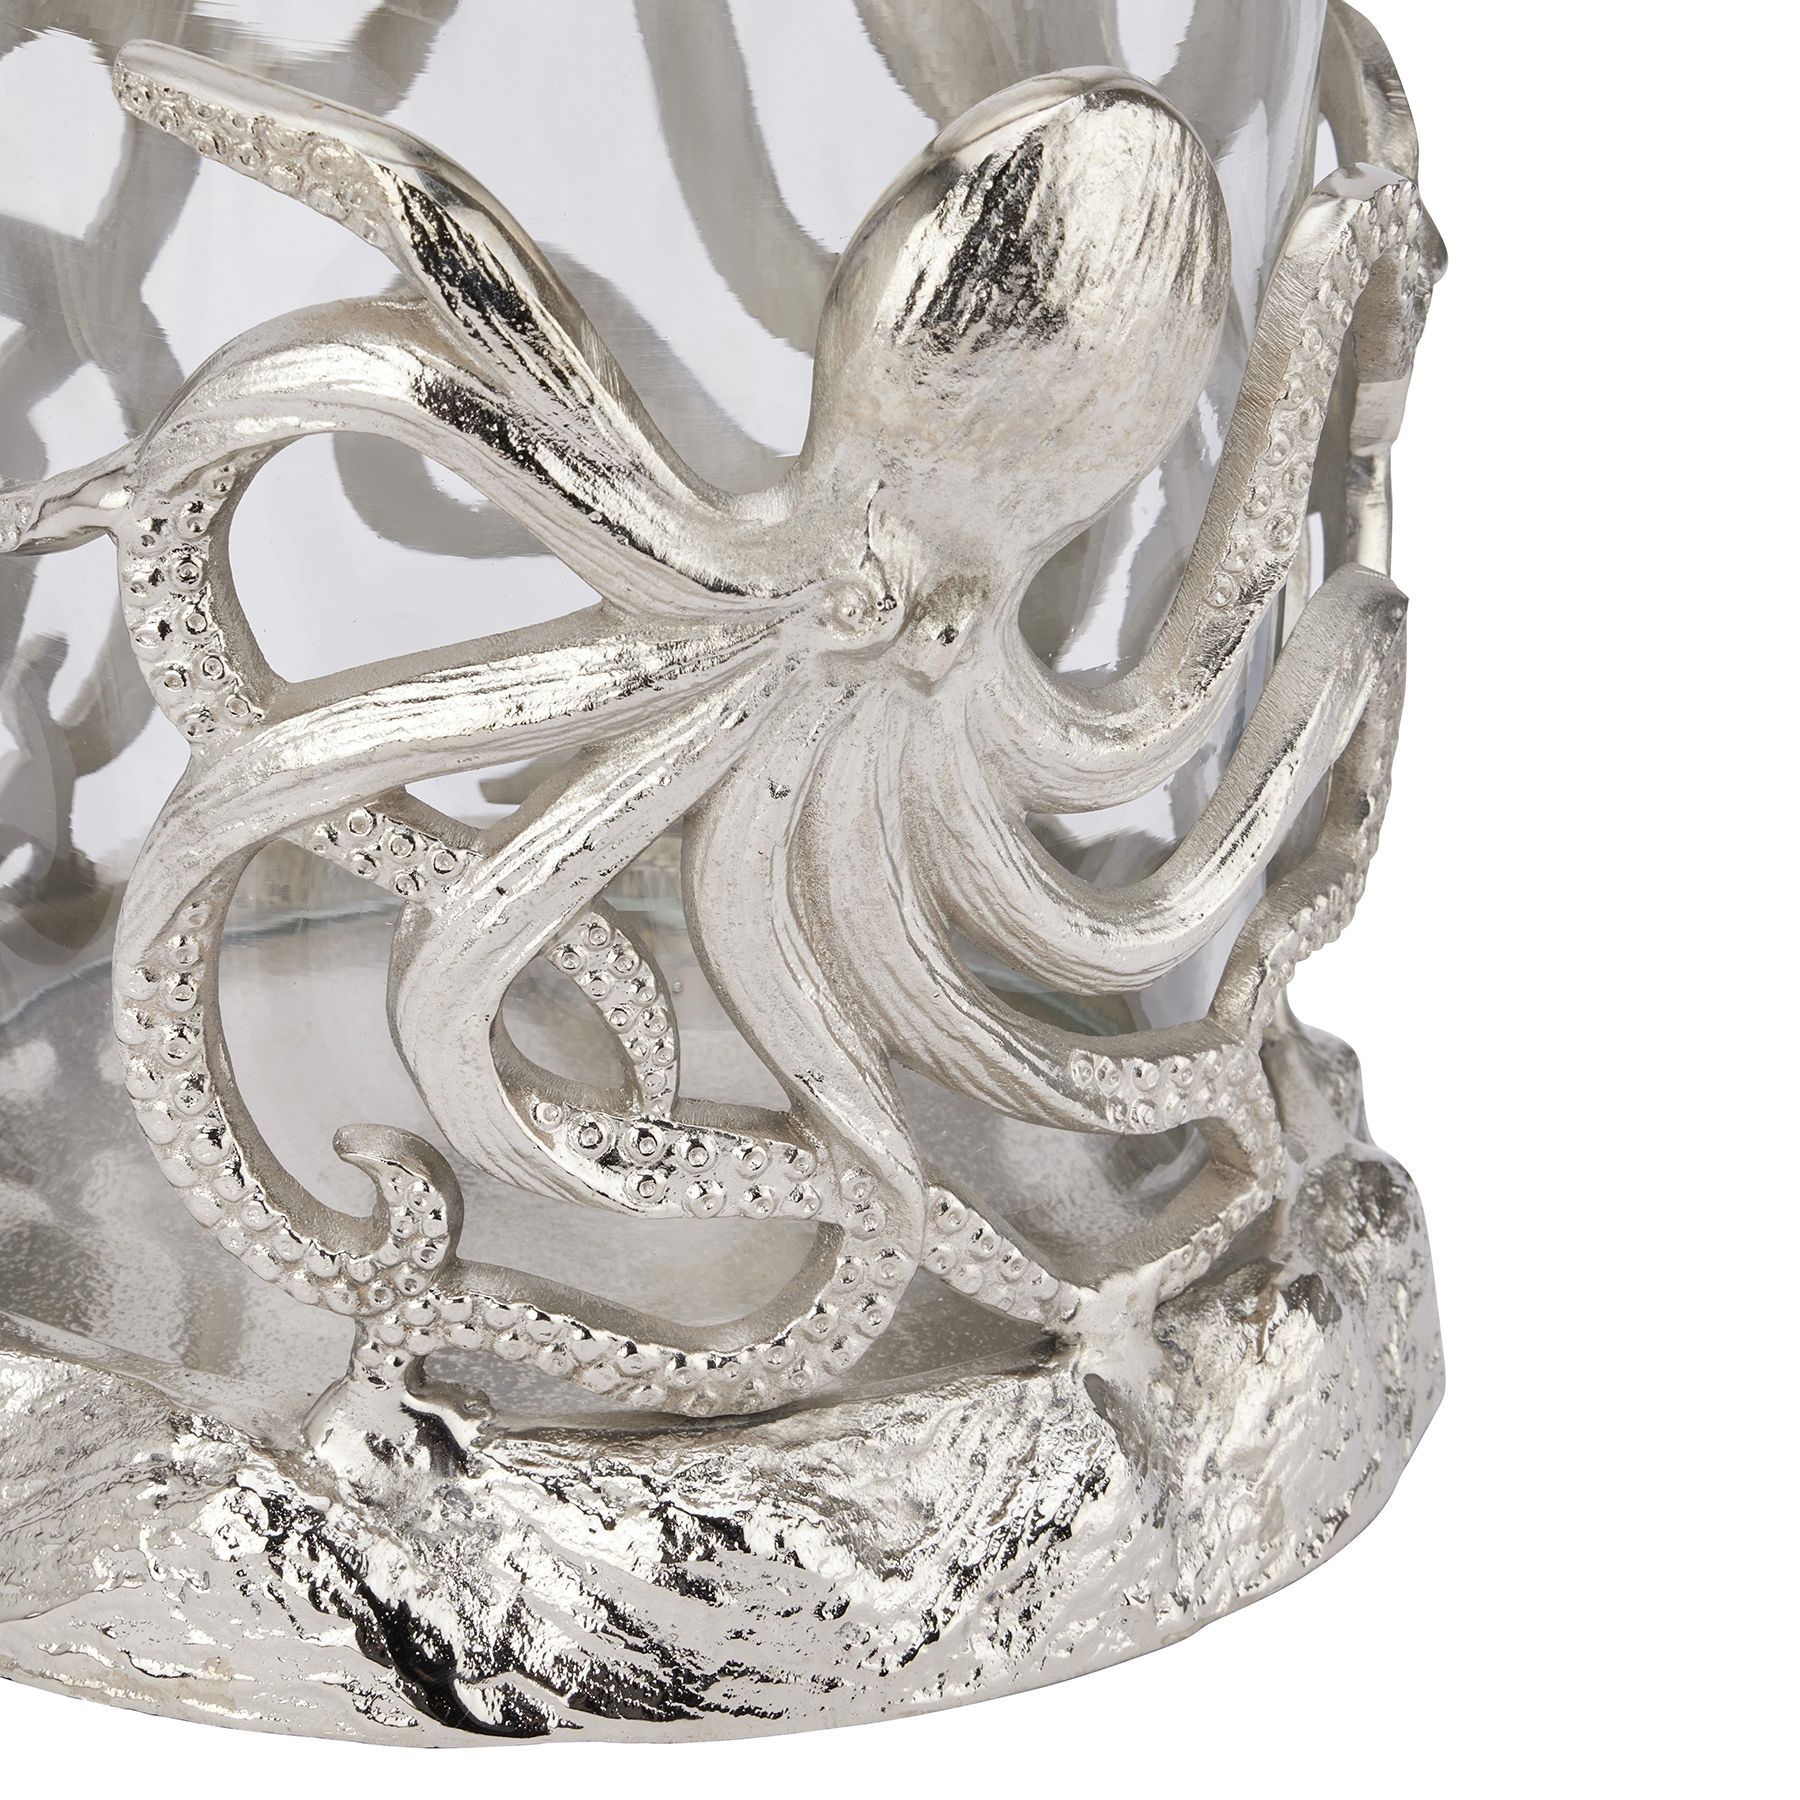 Silver Octopus Candle Hurricane Lantern - Image 2